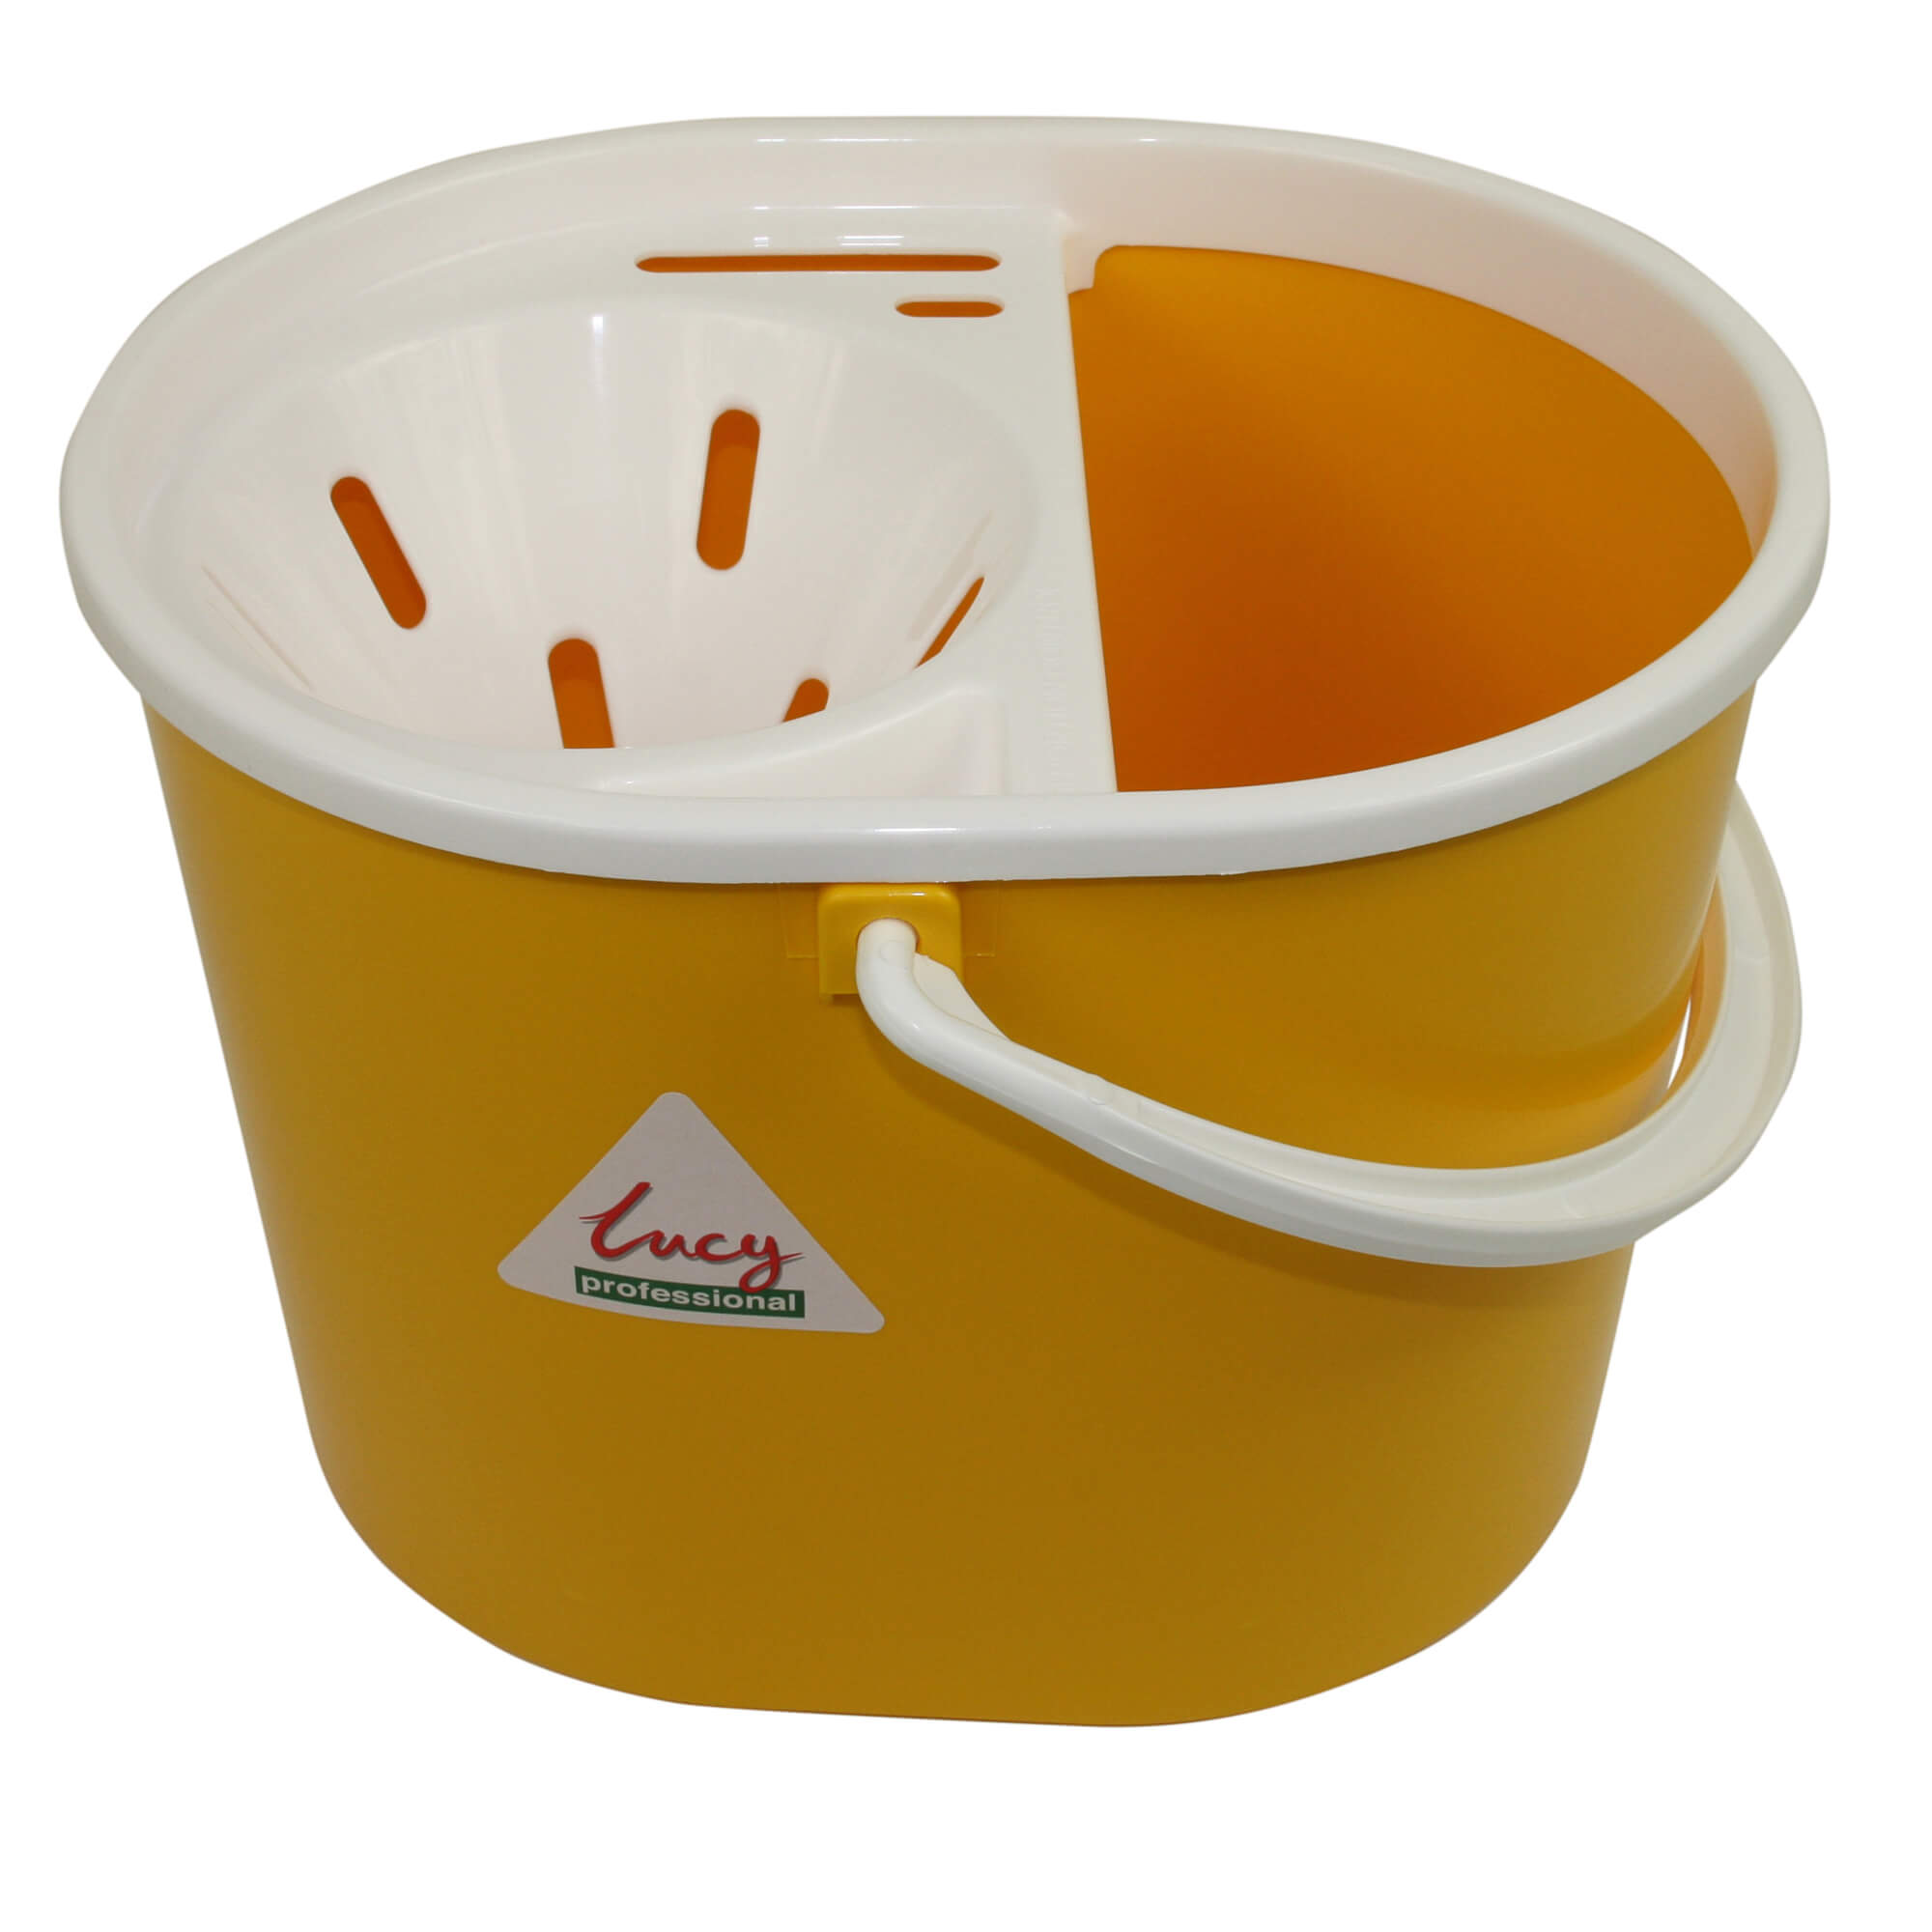 Oval Mop Buckets - Yellow